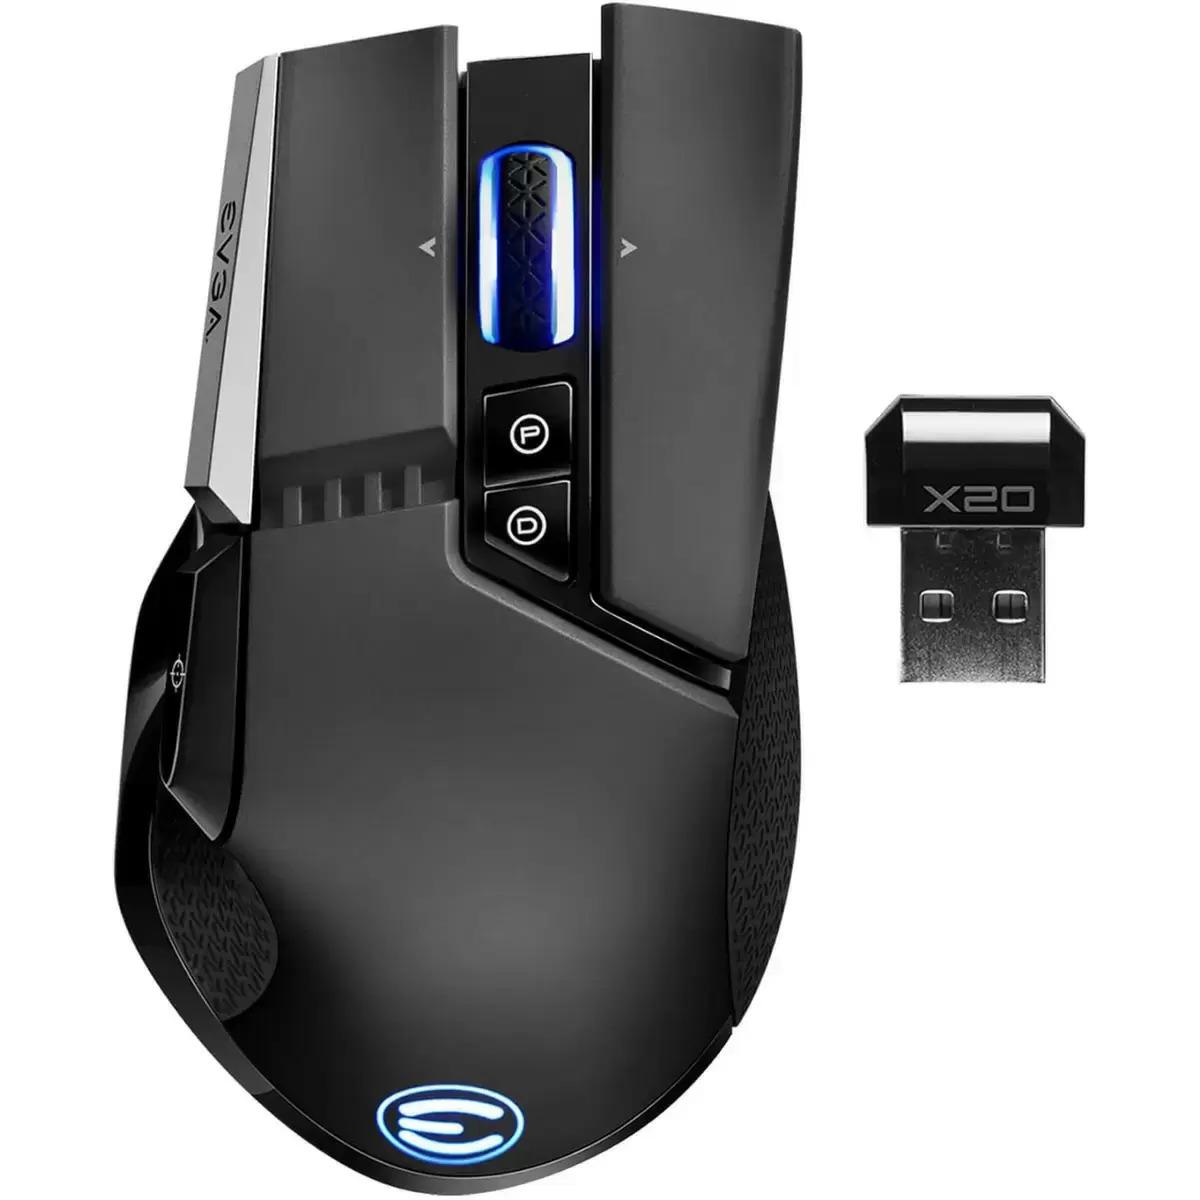 EVGA X20 16,000 DPI Wireless Ergonomic Gaming Mouse for $17.99